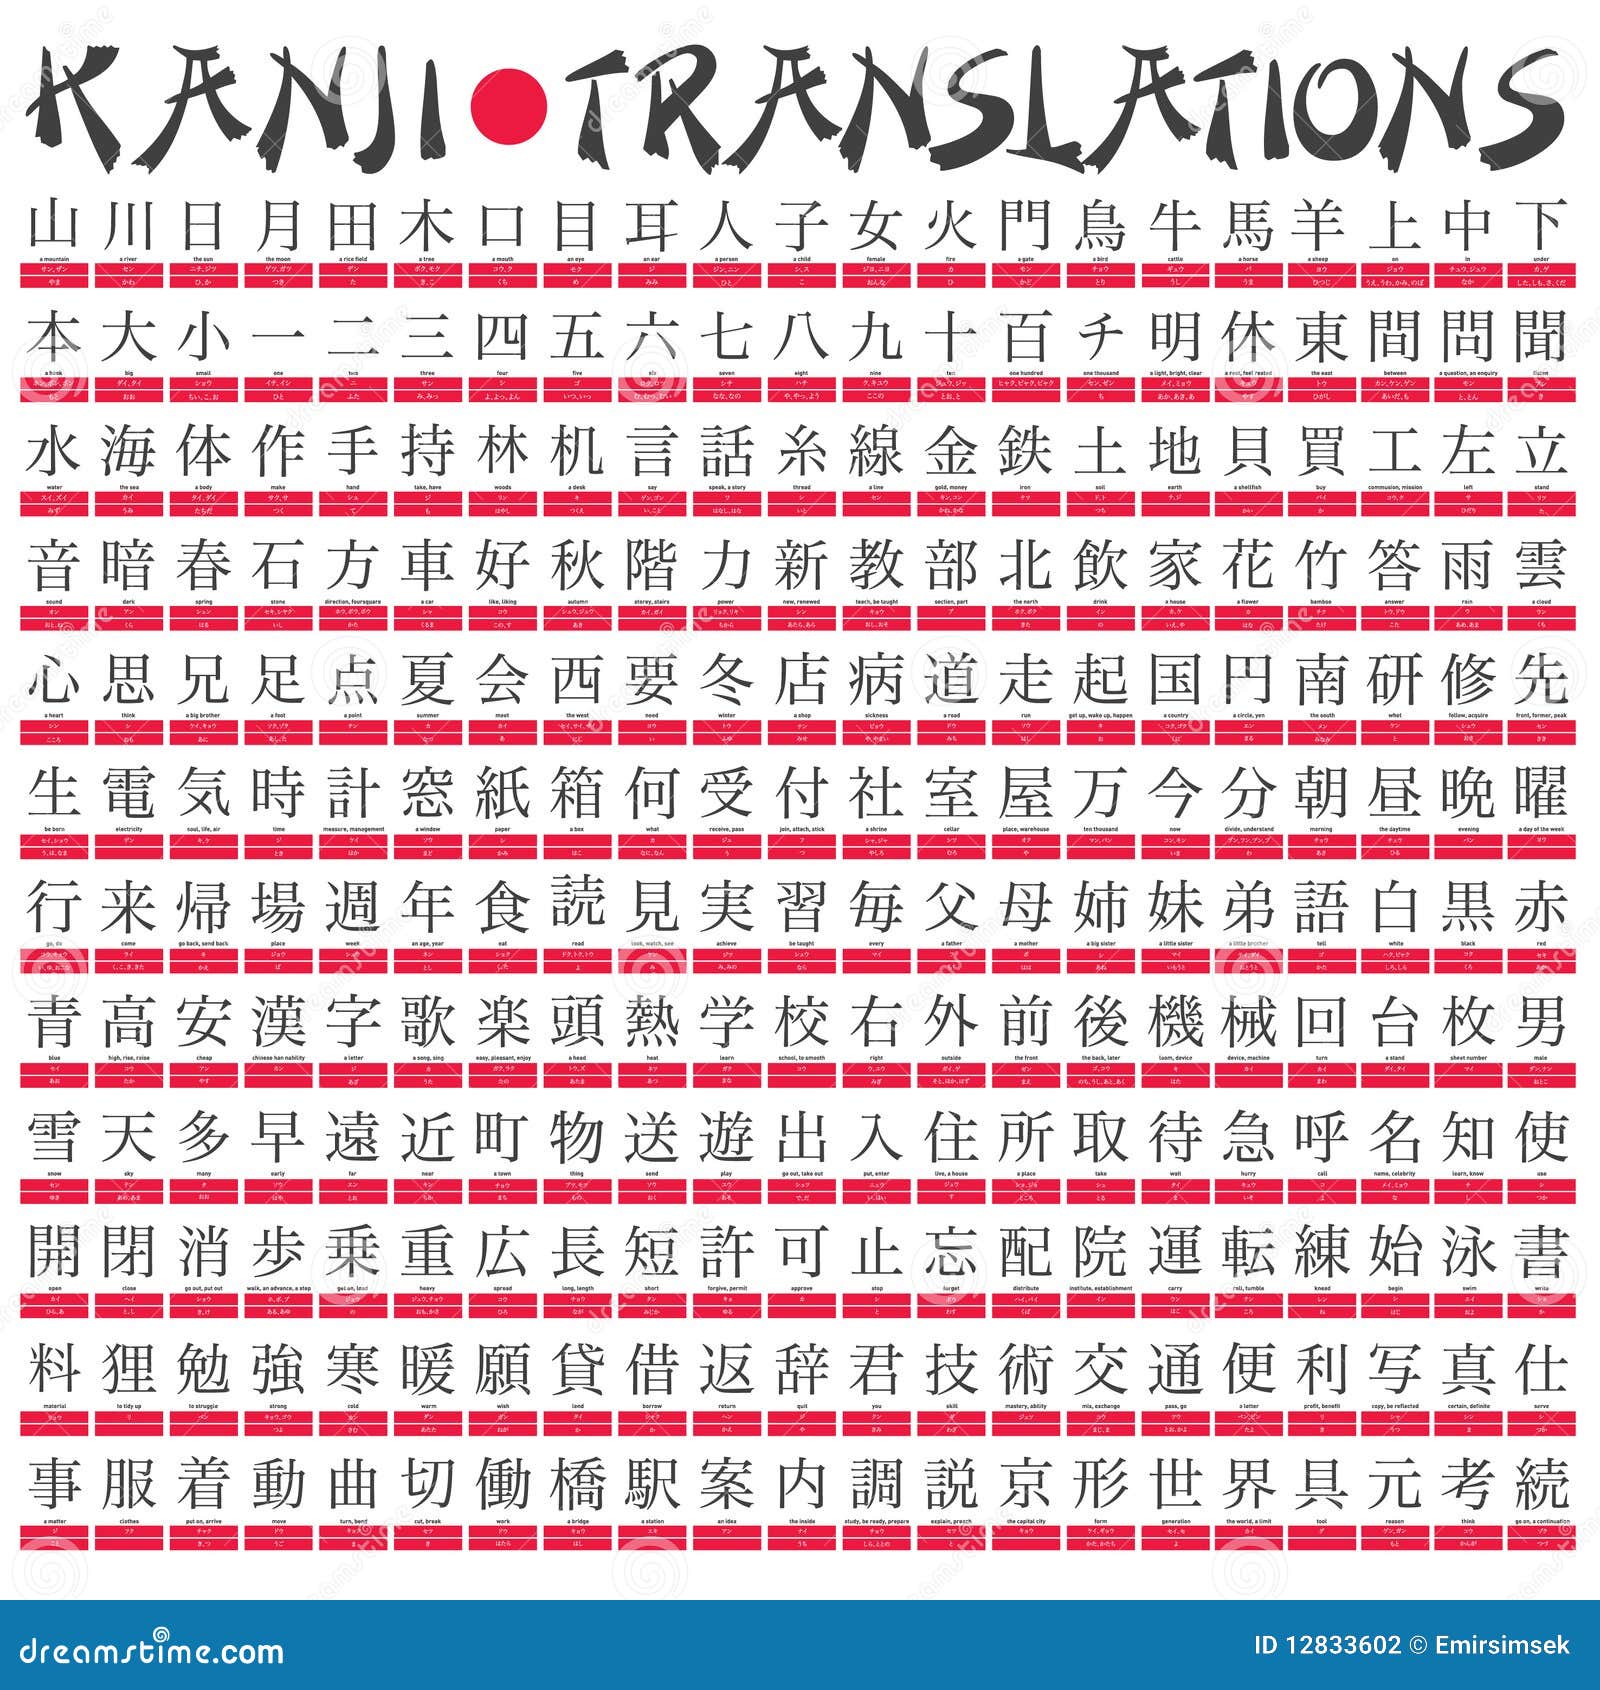 Kanji Translations stock vector. Illustration of language ...
